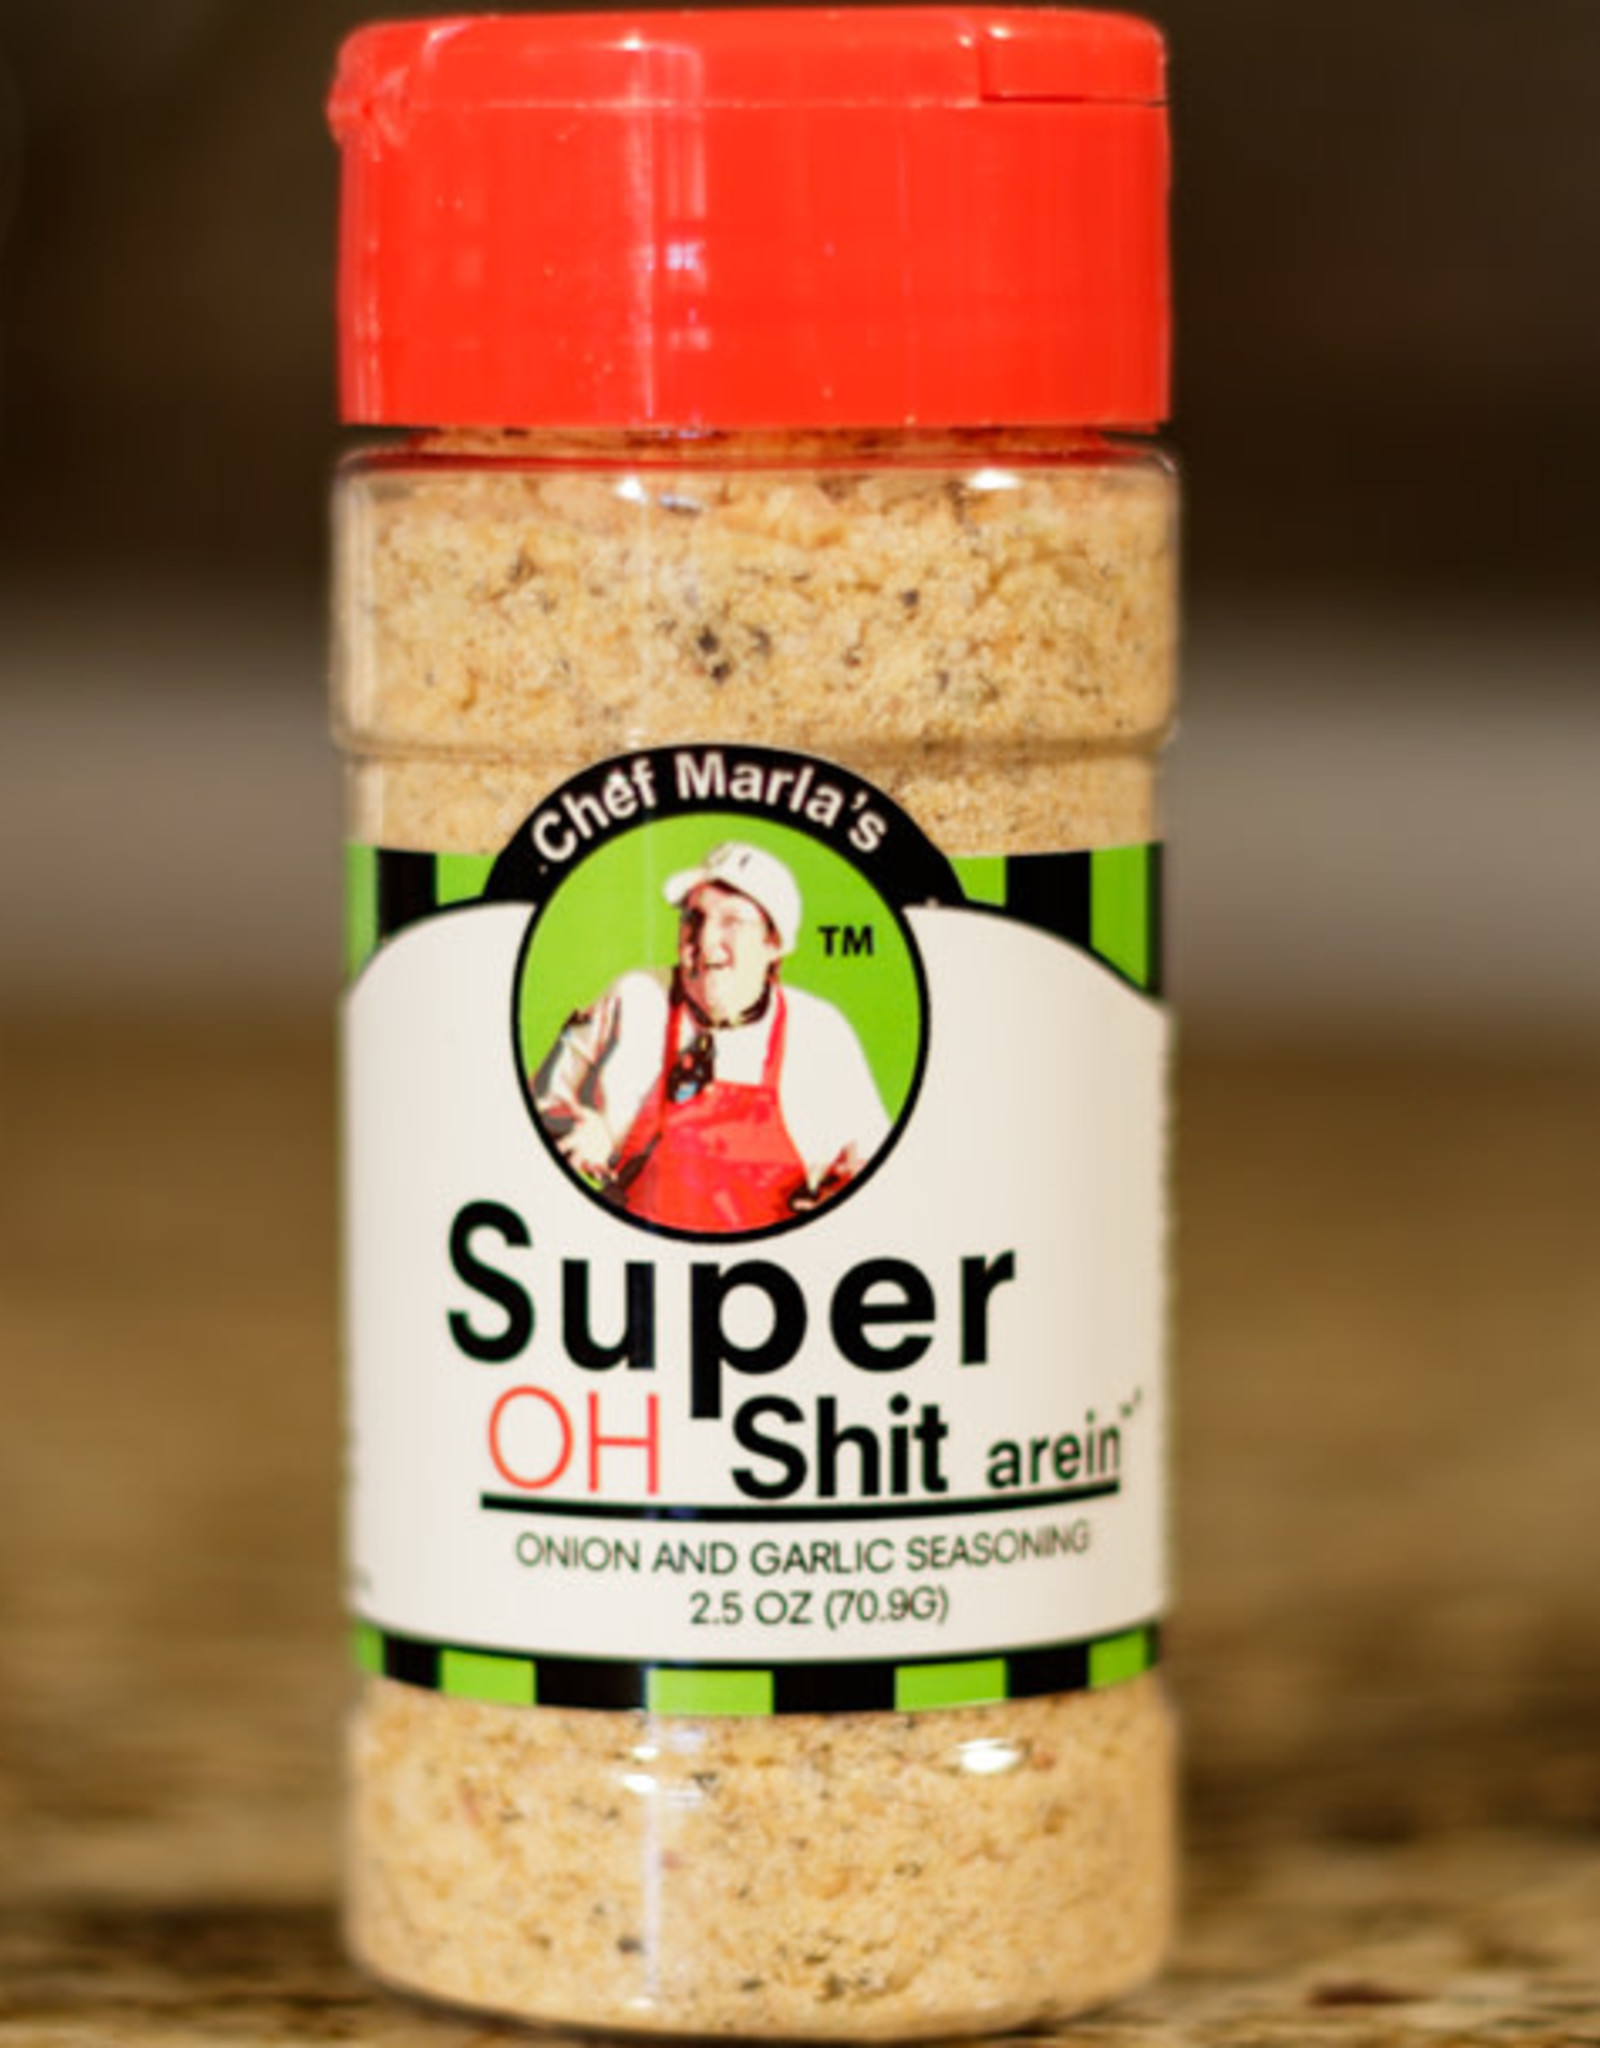 Chef Marla’s Super Oh Shit arein